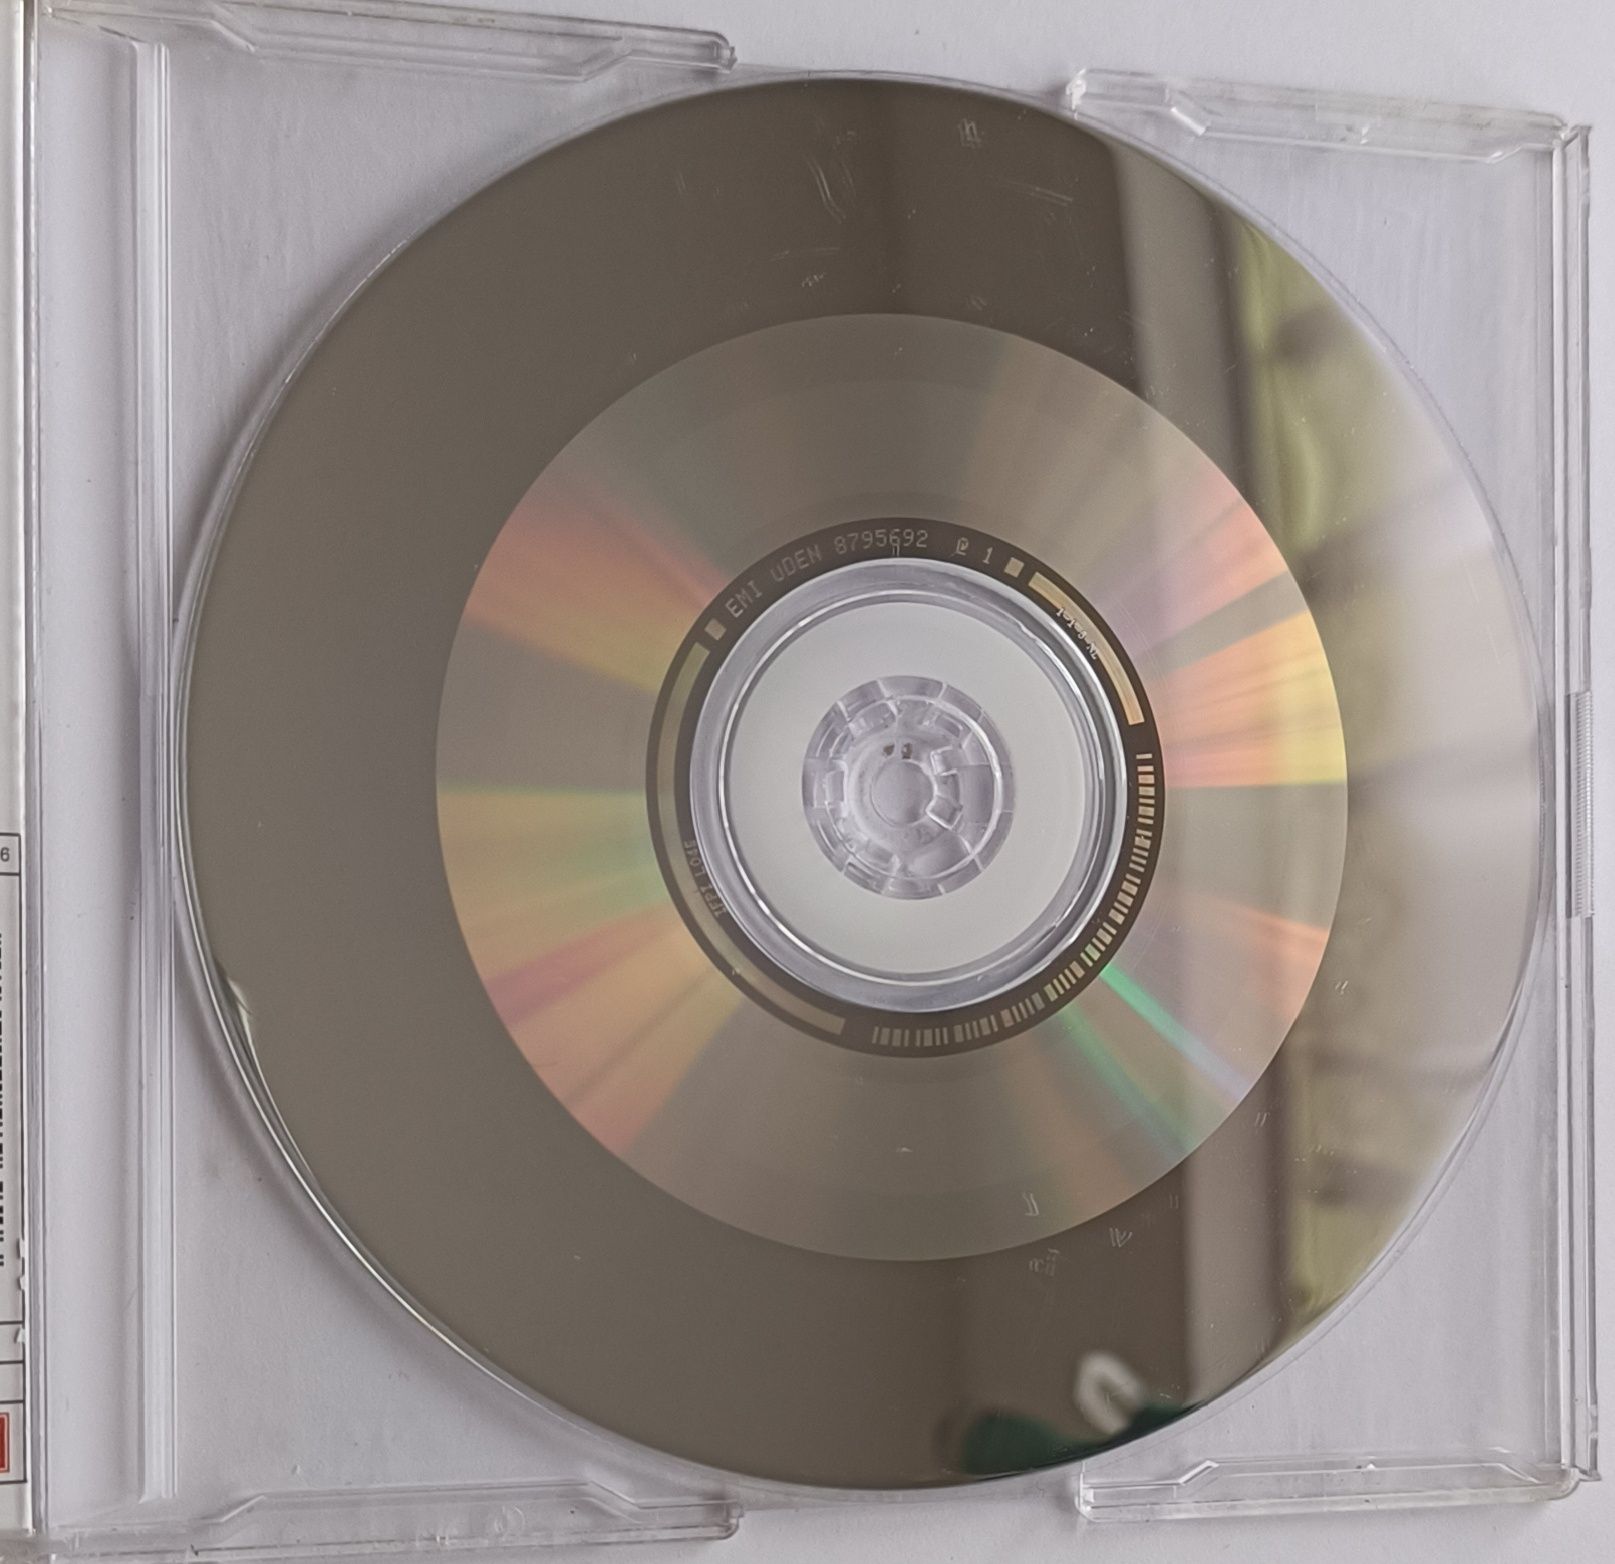 CDs PUR Immer Noch Da 2001r